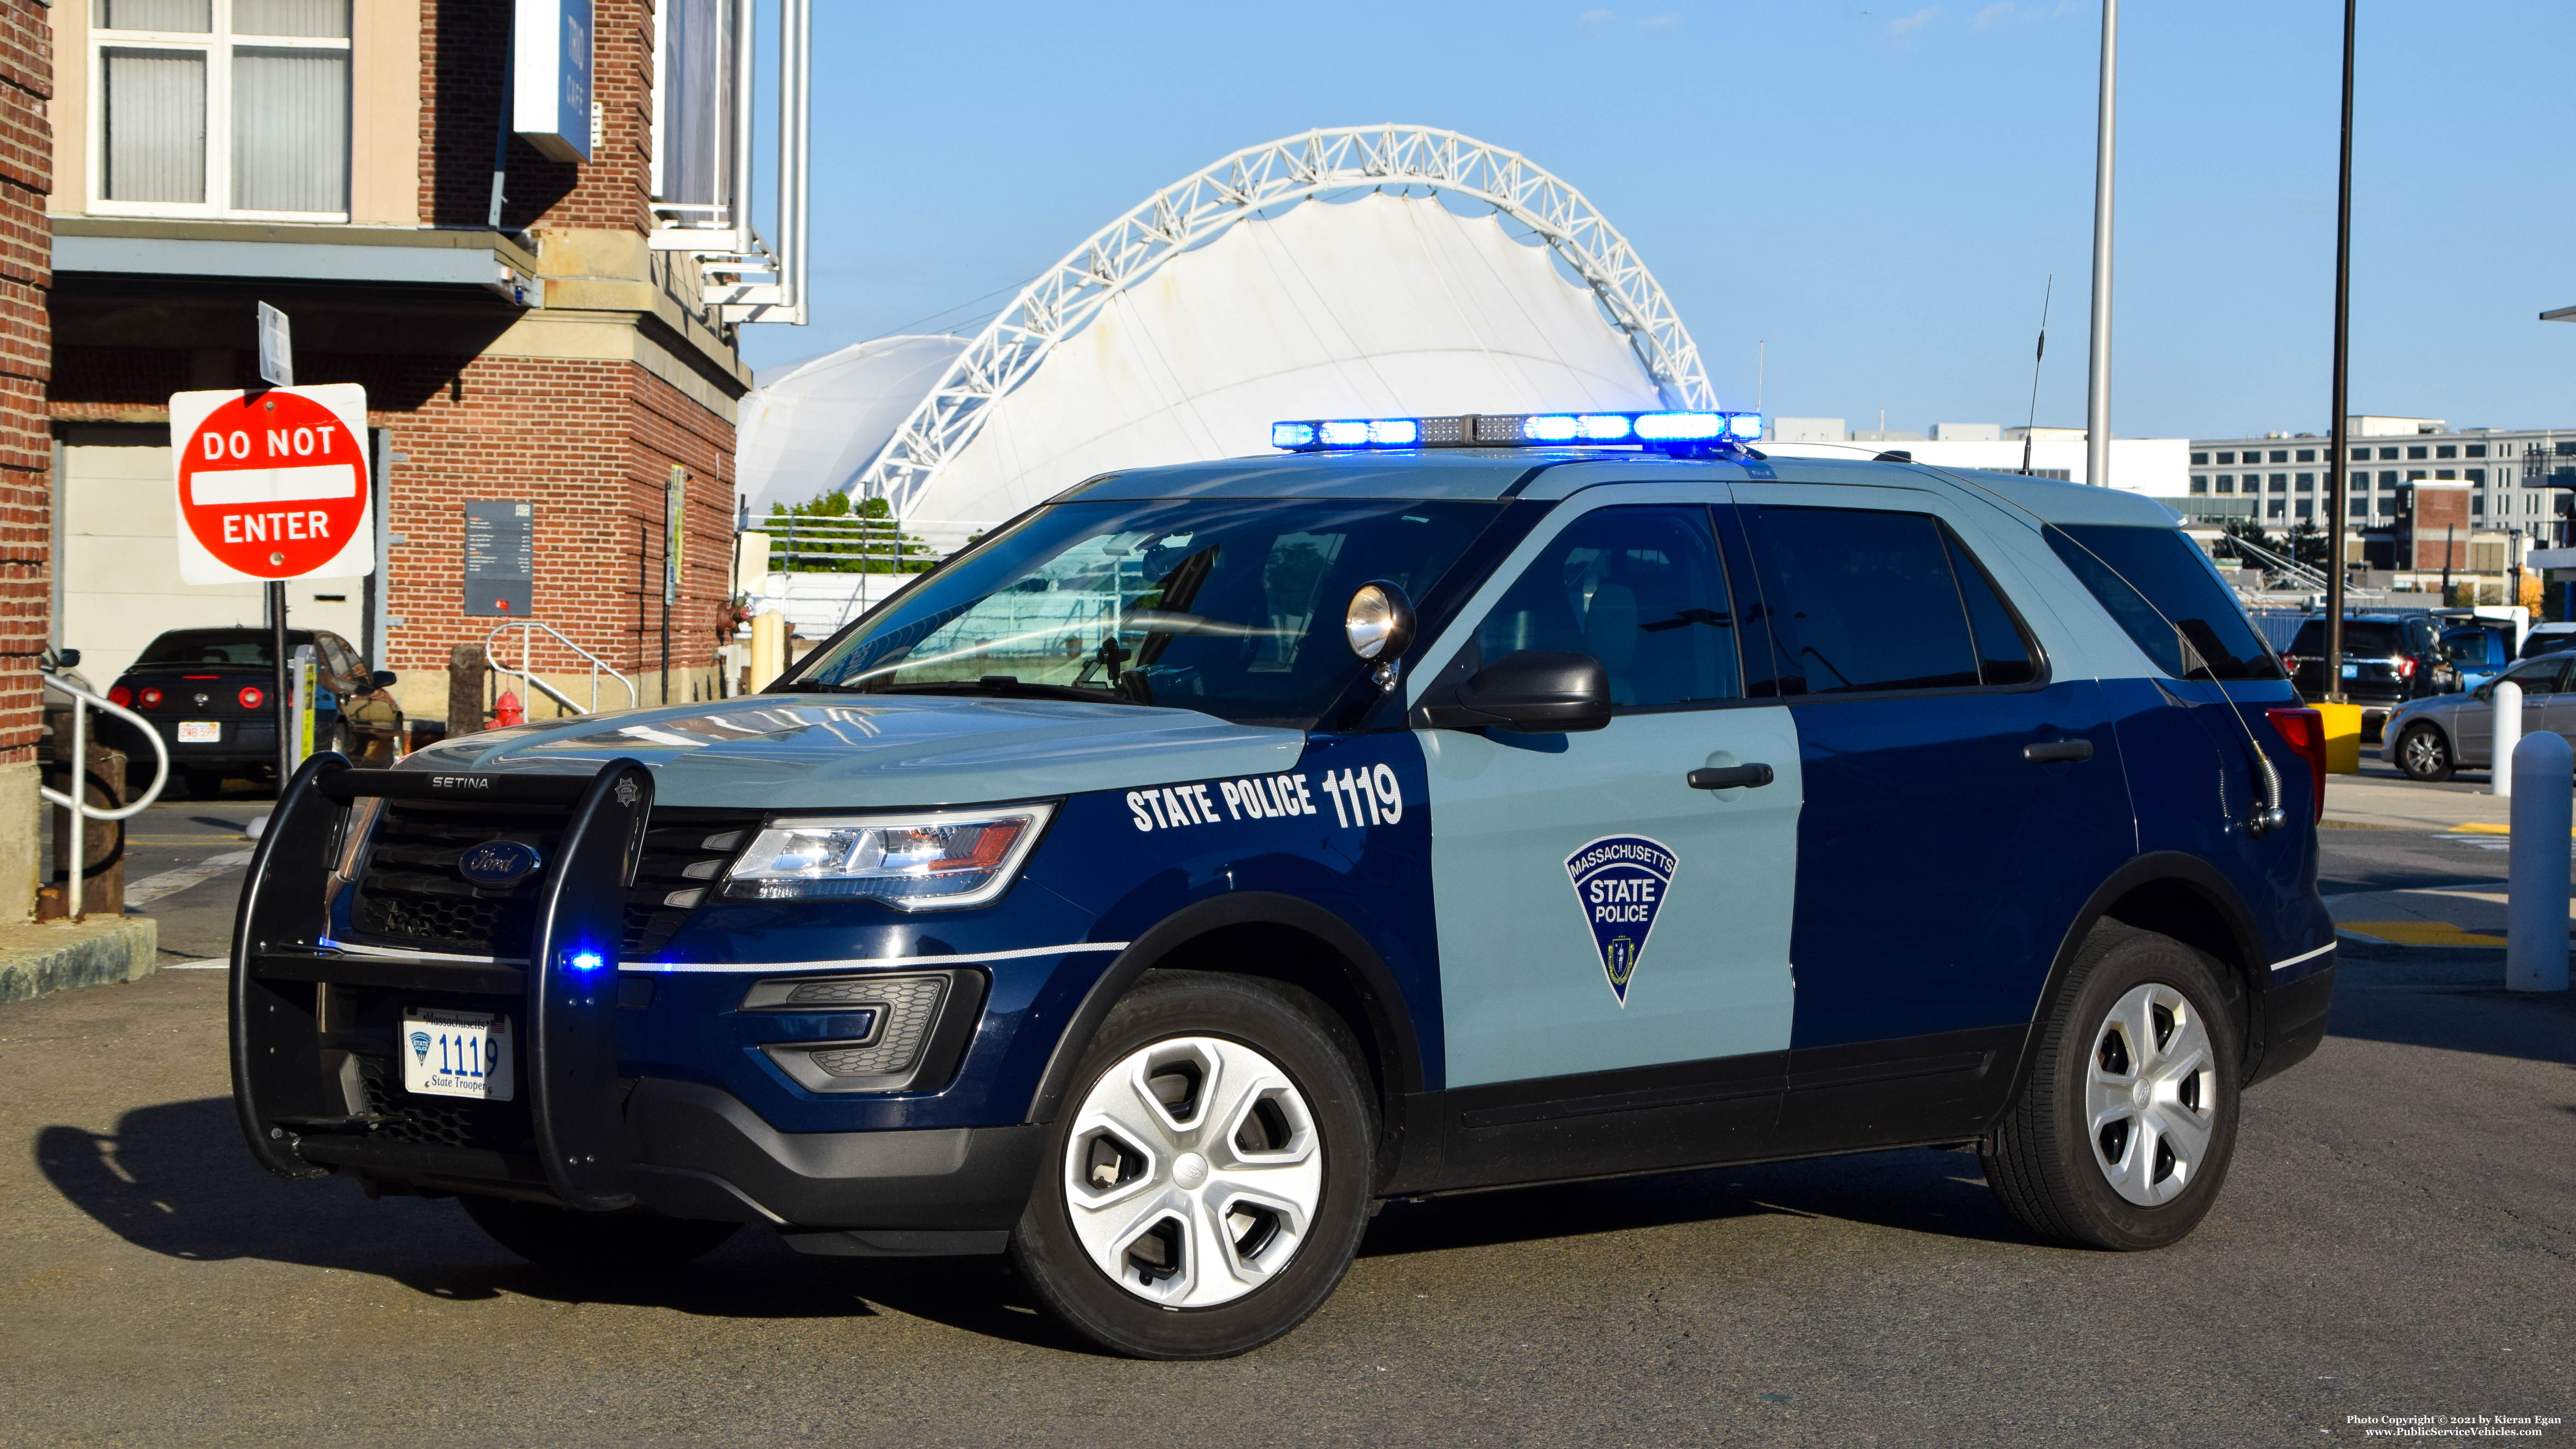 A photo  of Massachusetts State Police
            Cruiser 1119, a 2018 Ford Police Interceptor Utility             taken by Kieran Egan